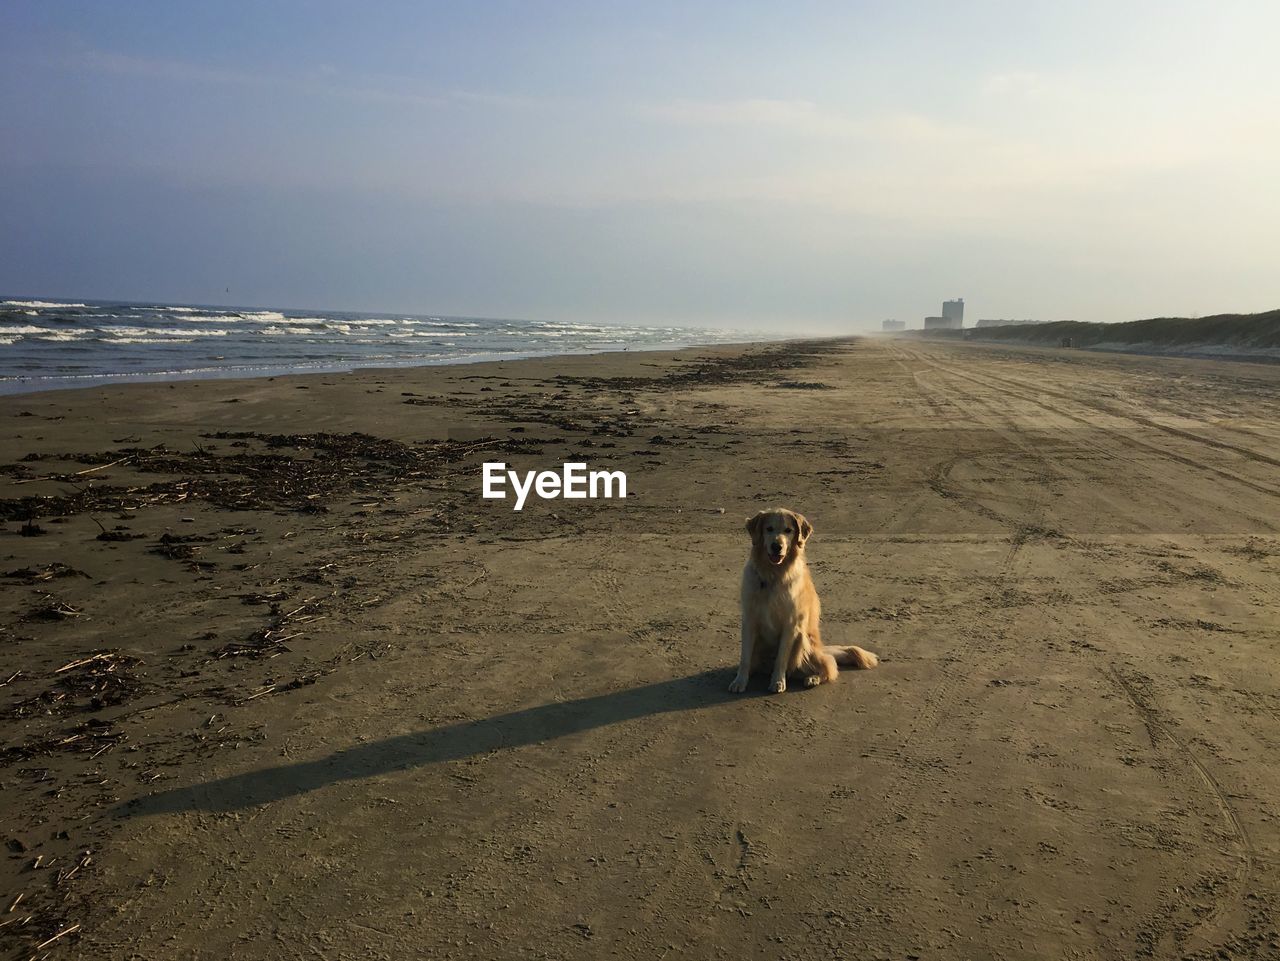 Dog on empty beach